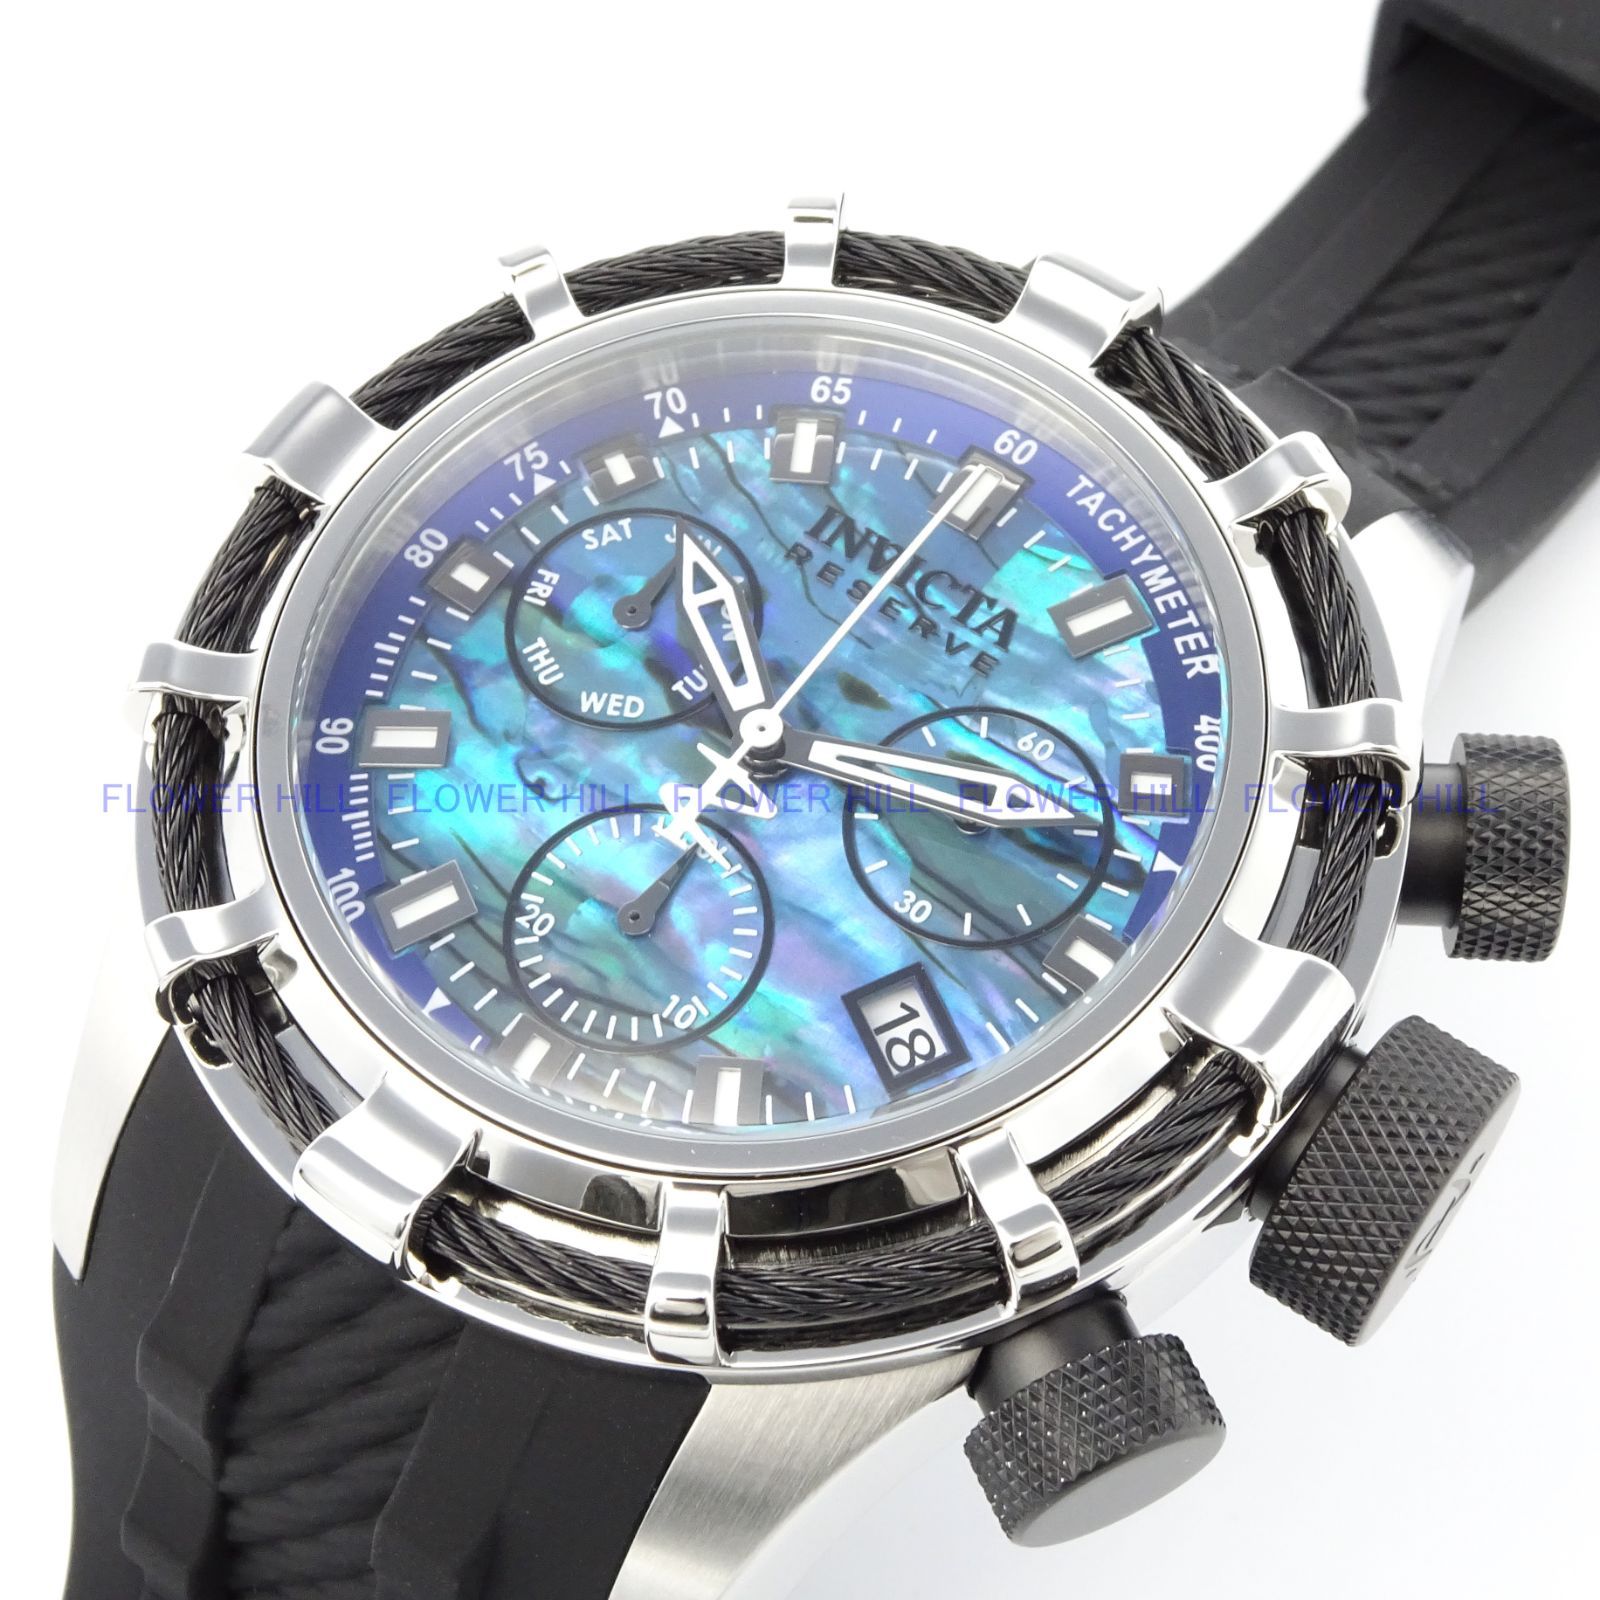 FlowerHillINVICTA 腕時計 メンズ シェル文字盤 BOLT 26195 シリコン